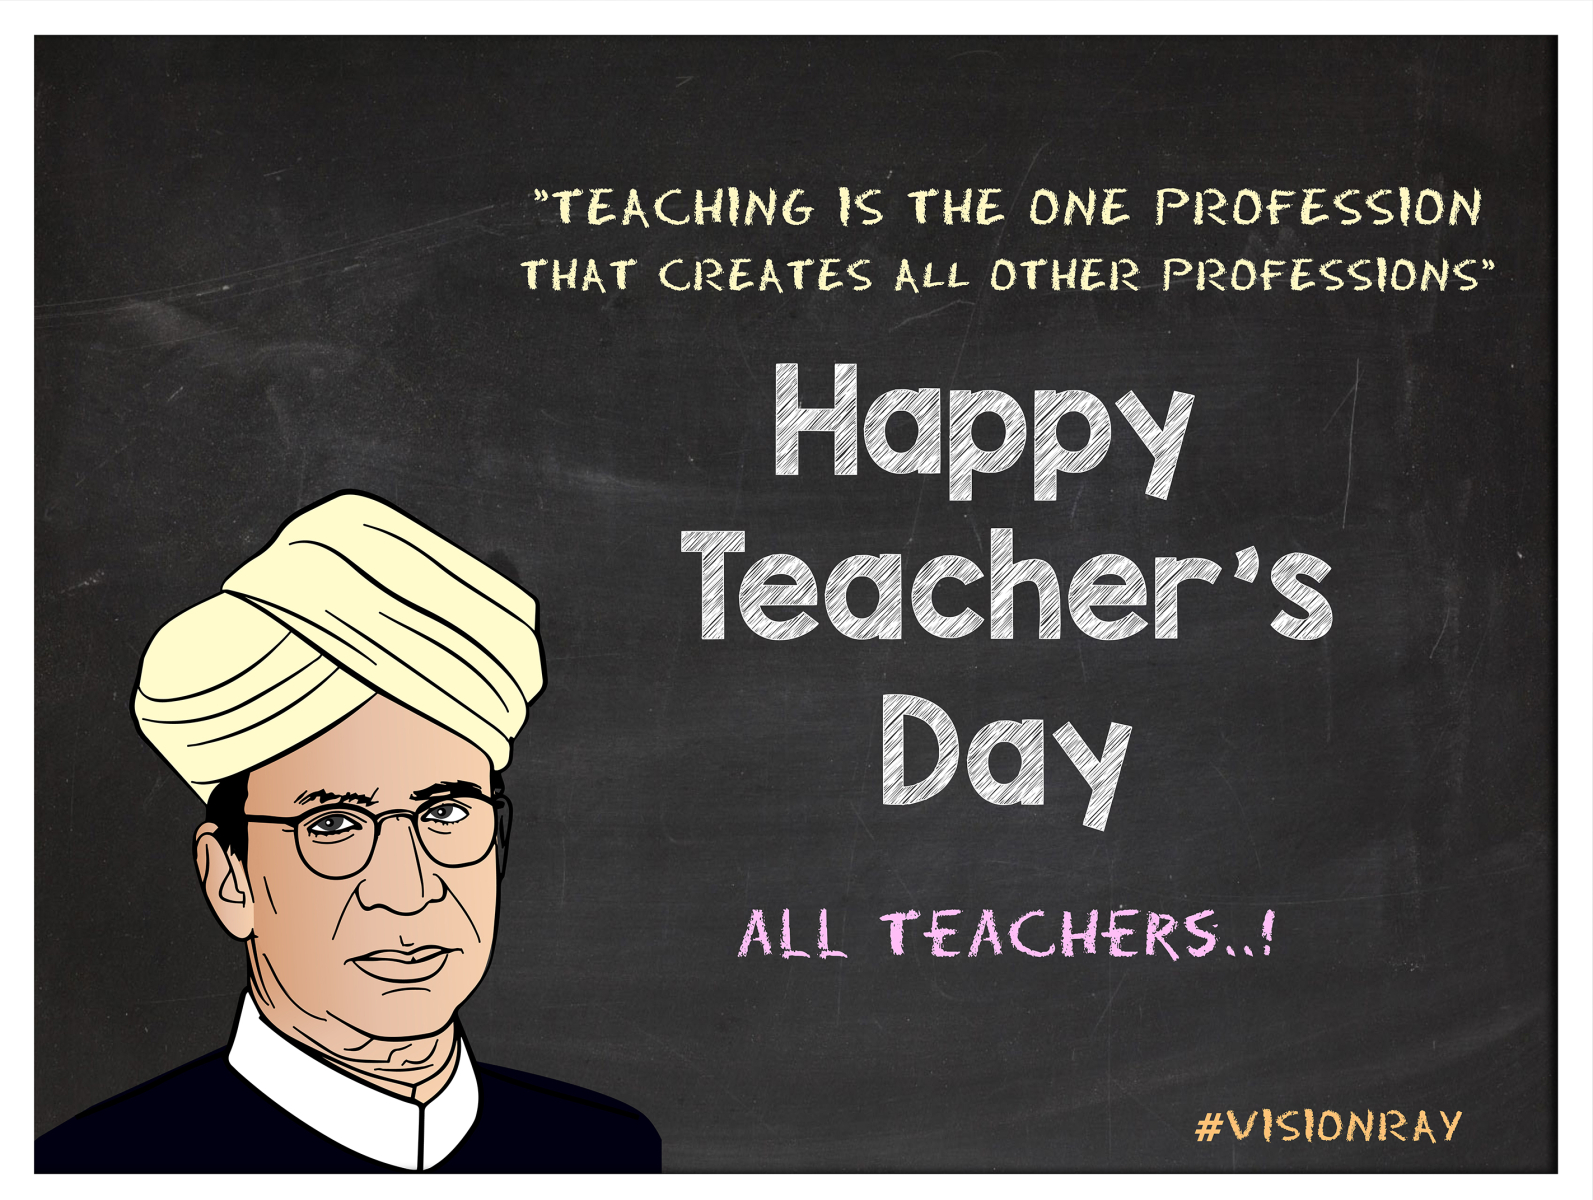 Happy Teacher s Day Poster 2020 by Maniraj Singh on Dribbble